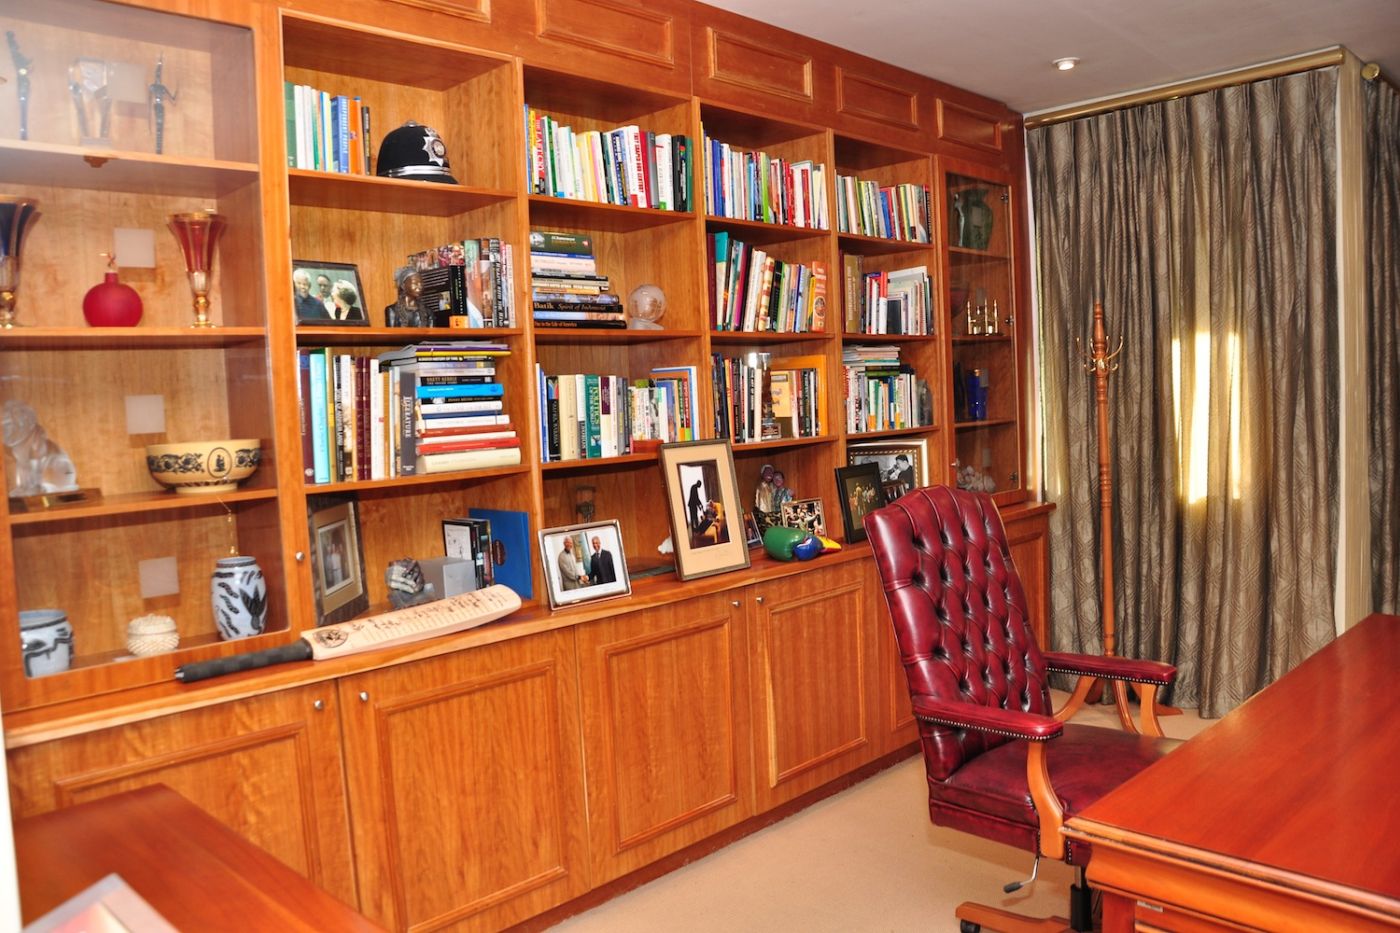 Mandela's study